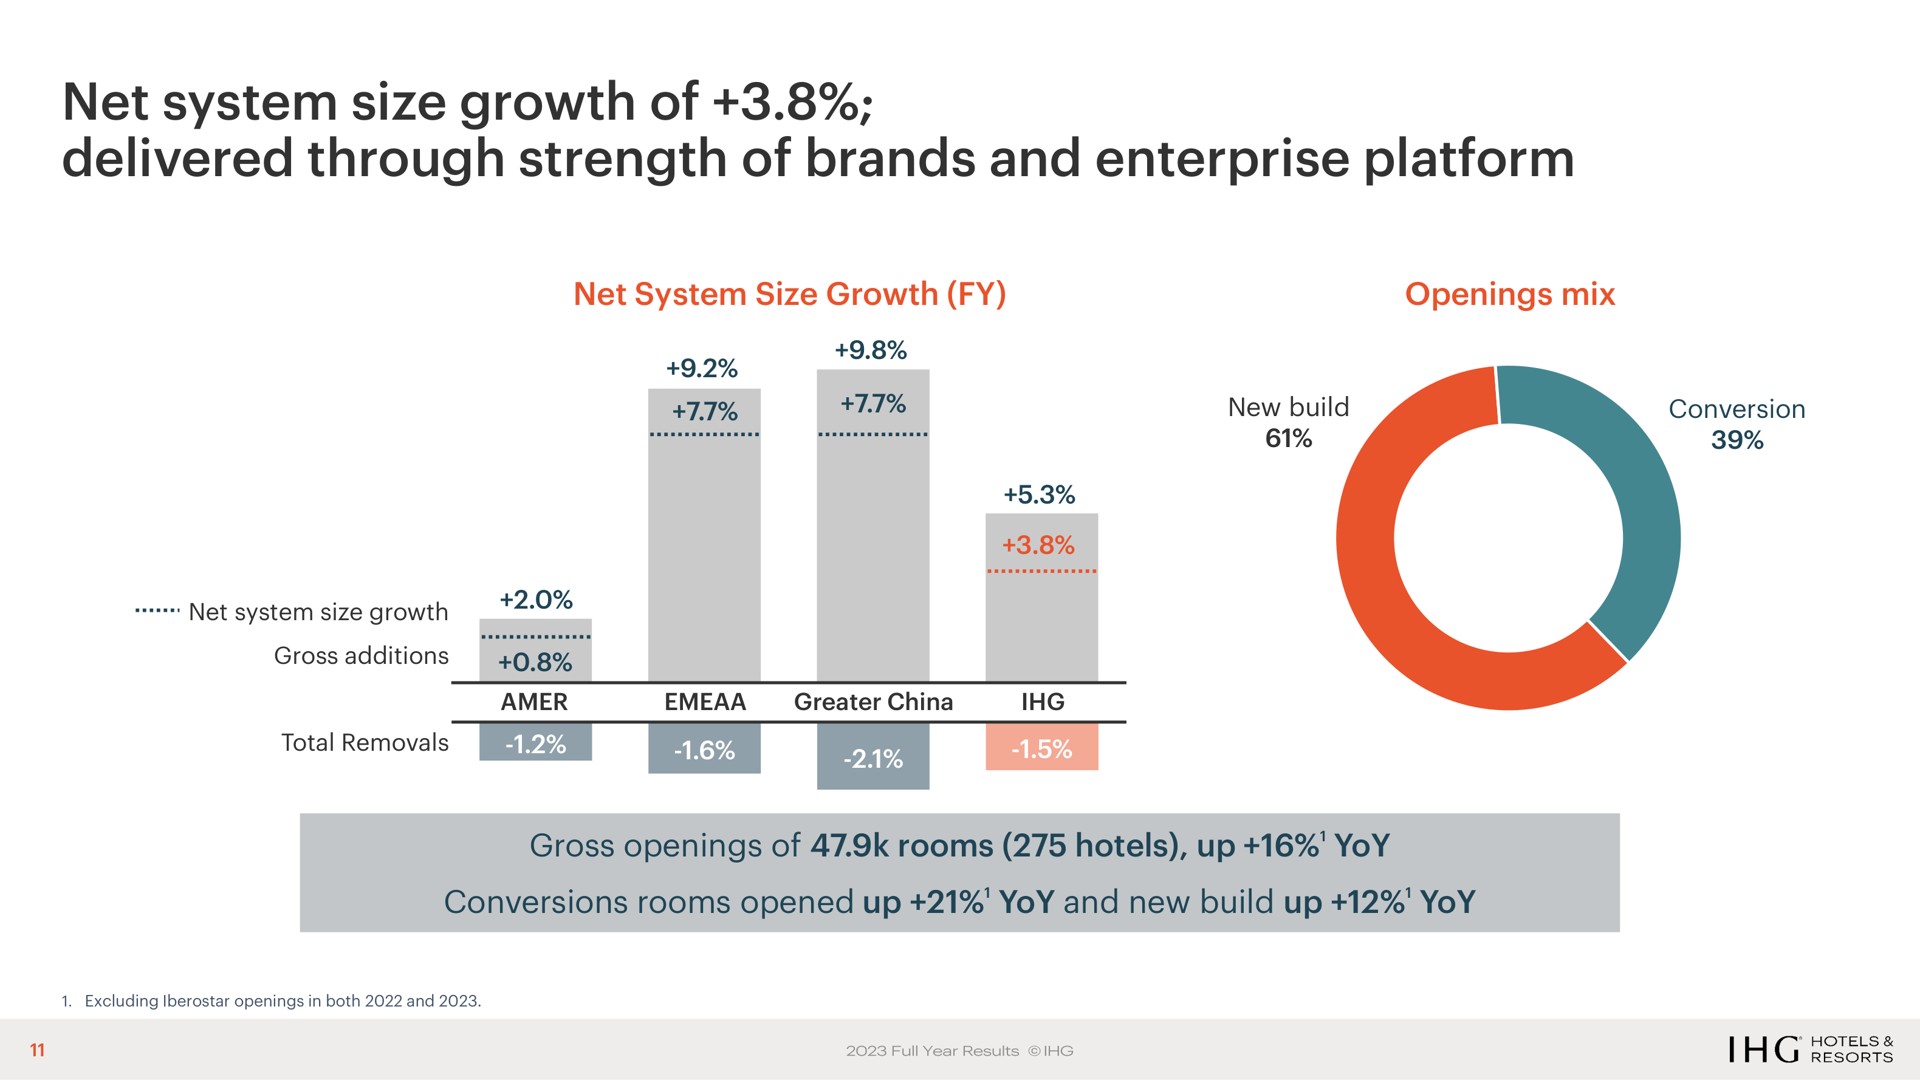 net system size growth of delivered through strength of brands and enterprise platform | IHG Hotels